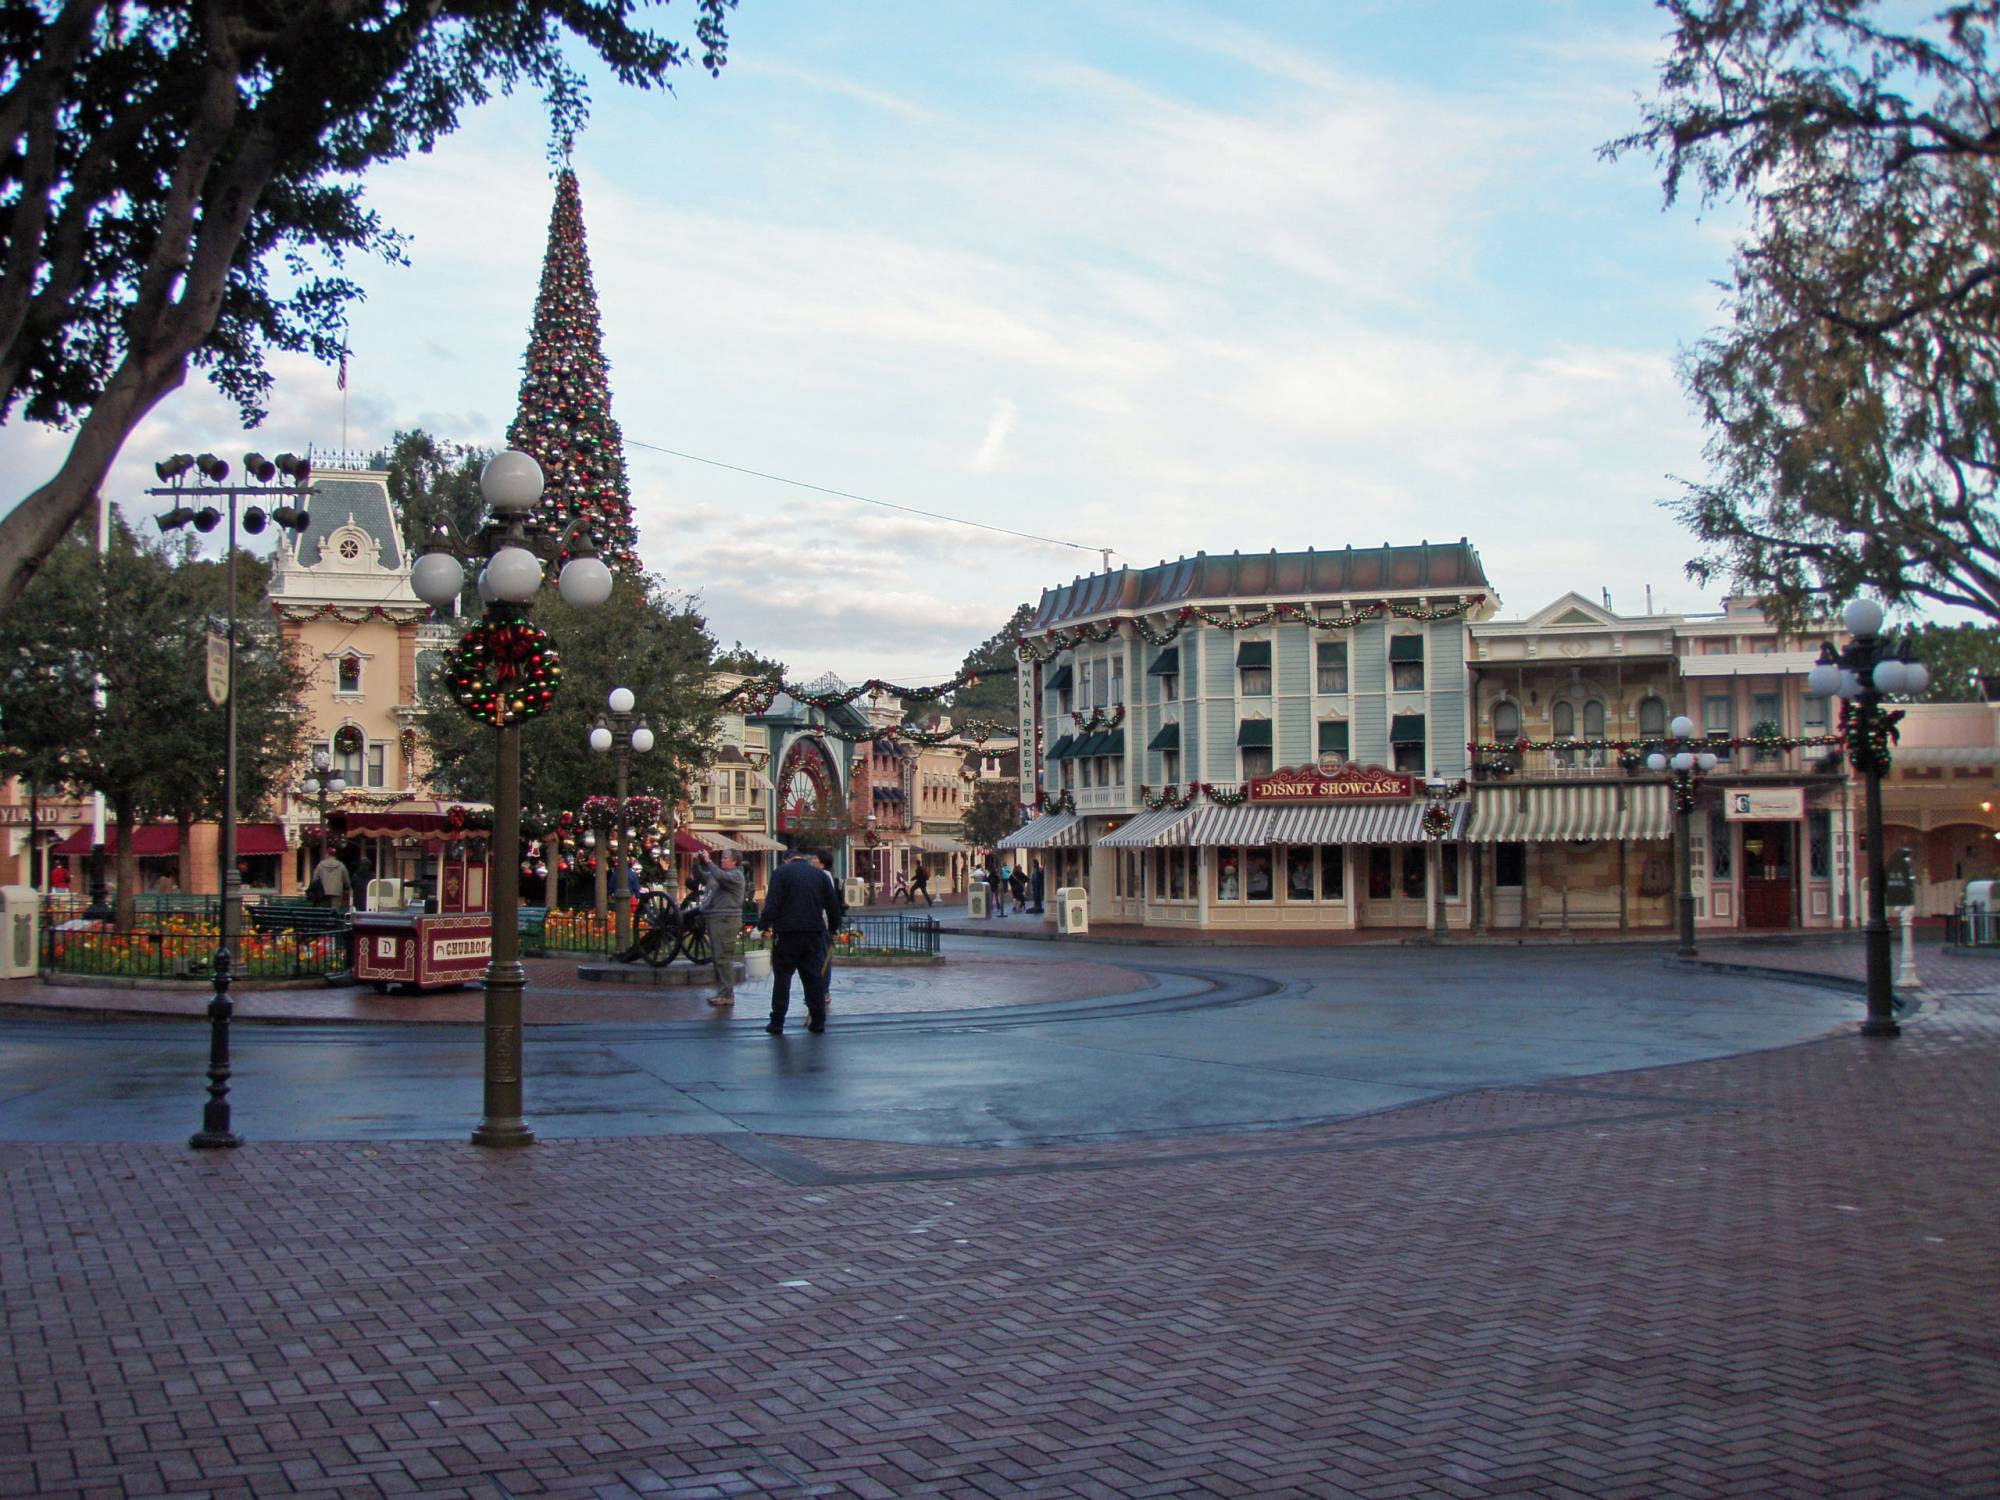 Main Street - Entrance w/ Christmas decorations